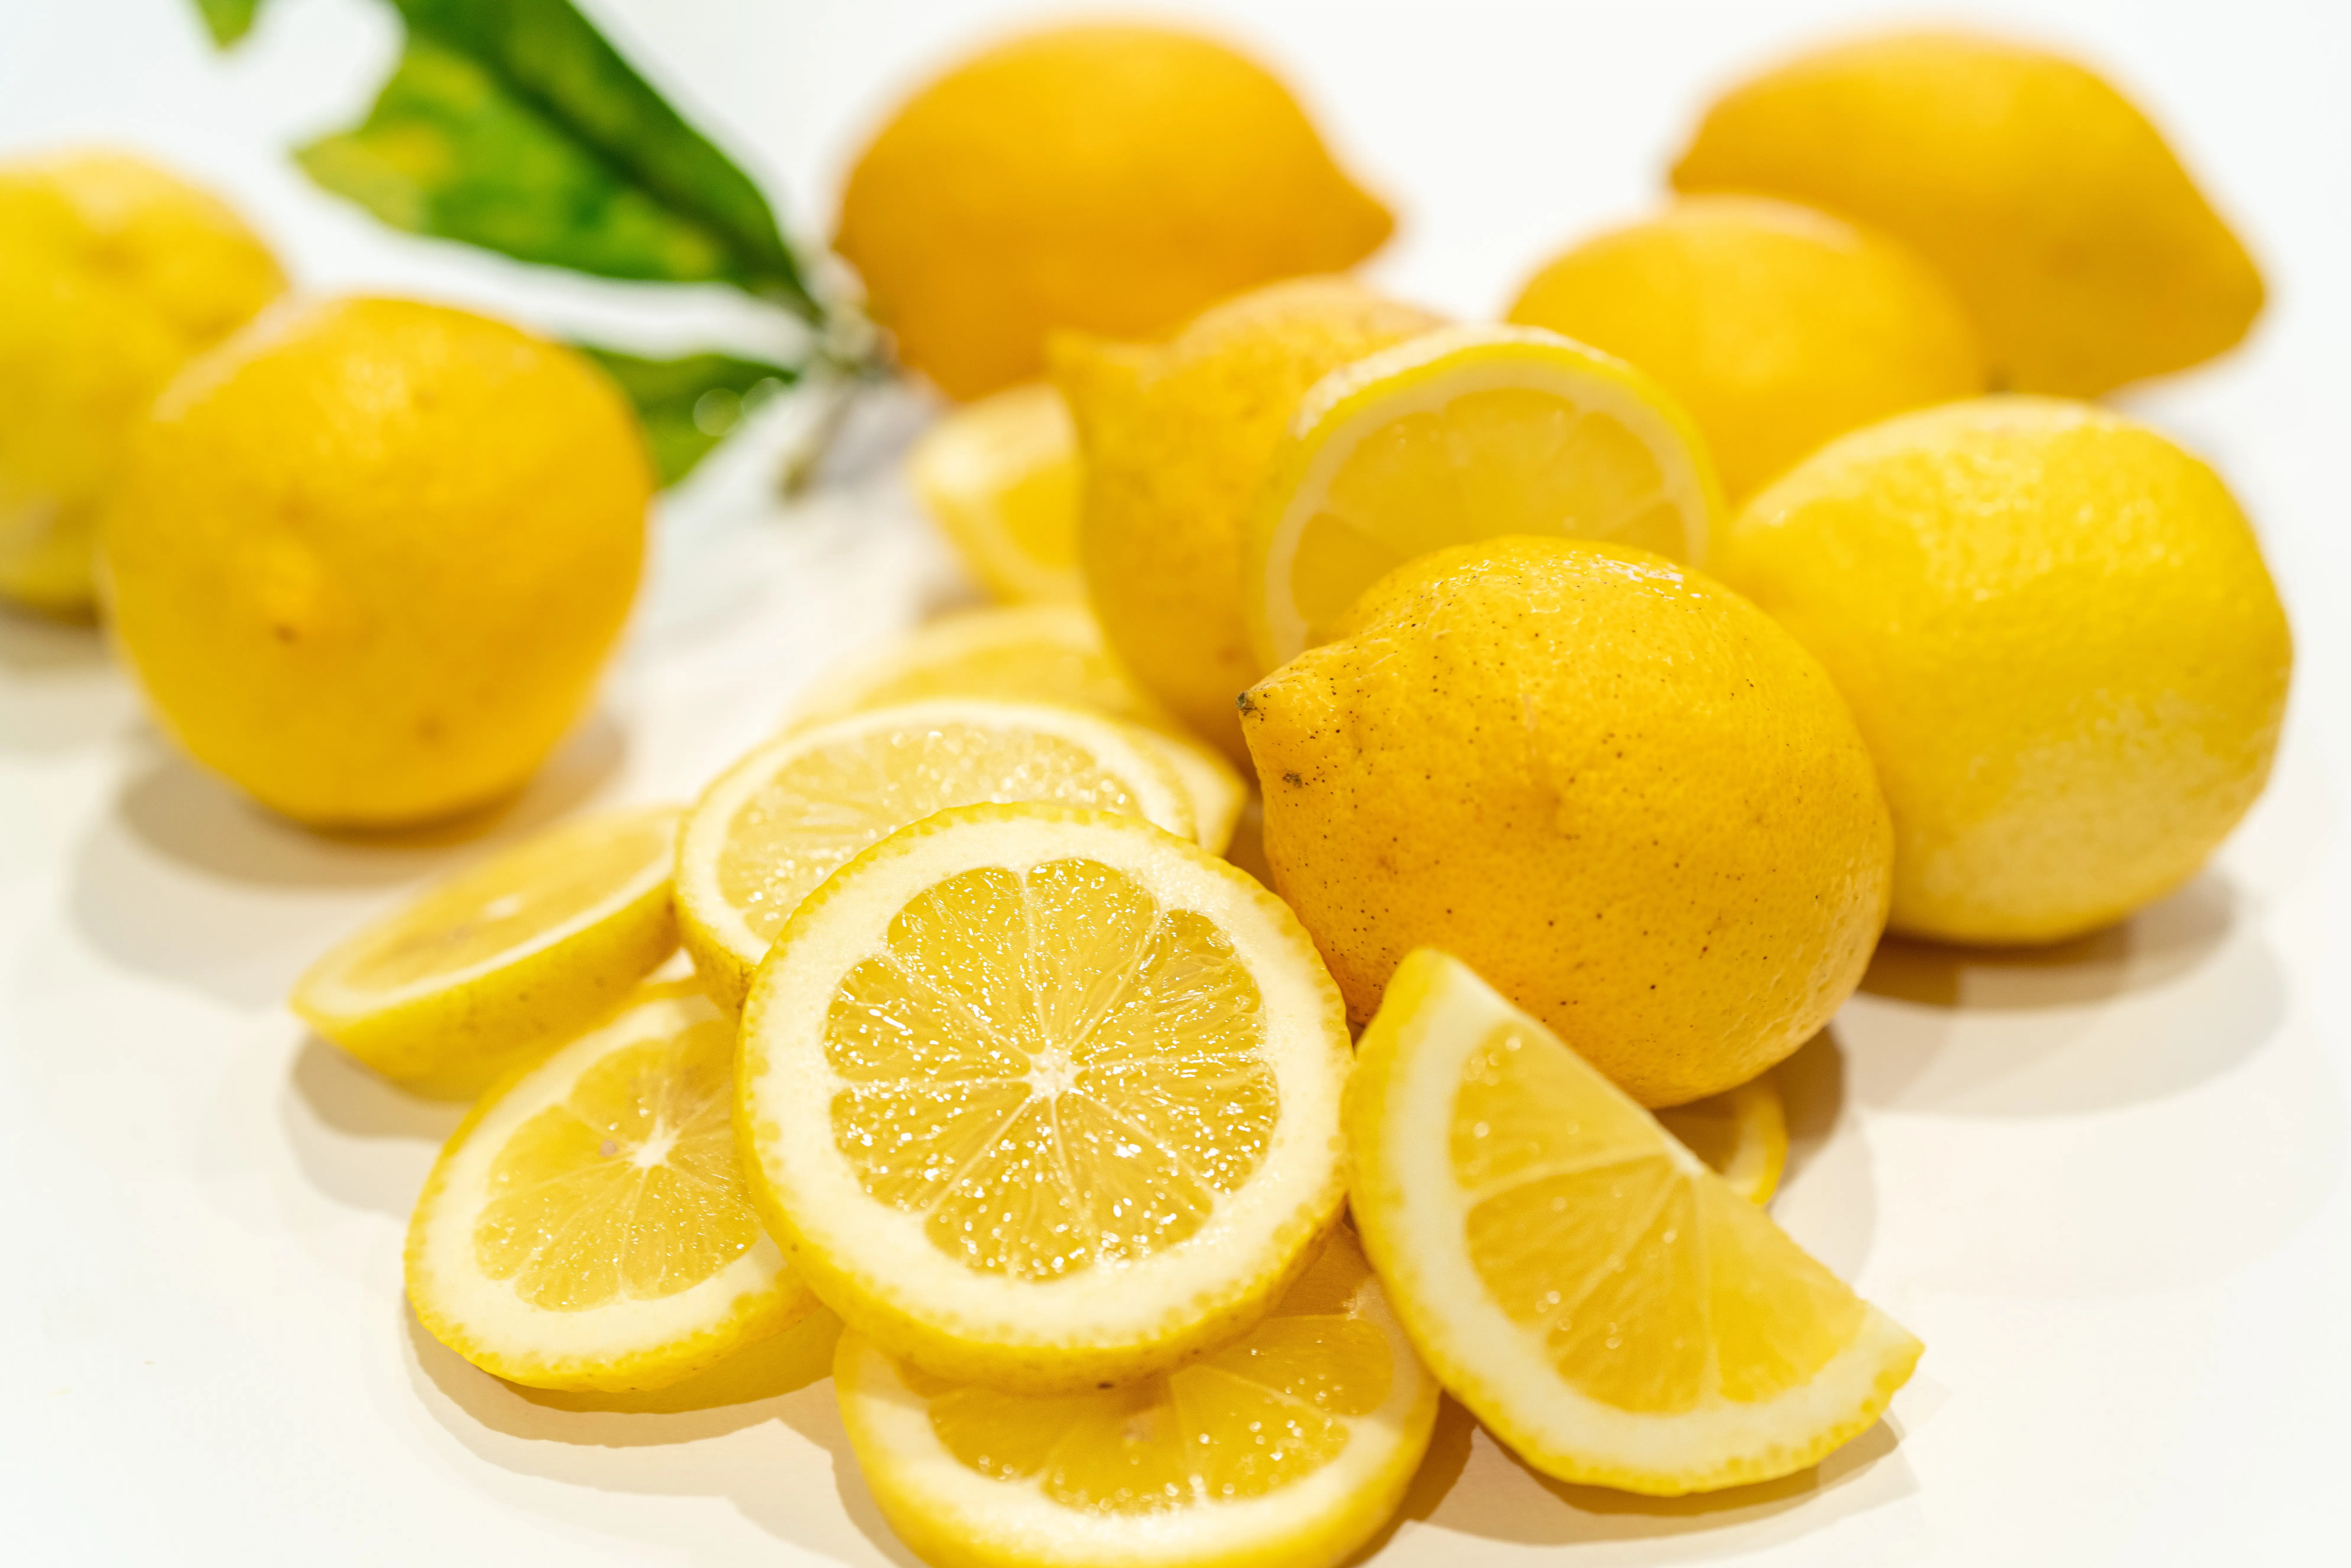 6. Lemon